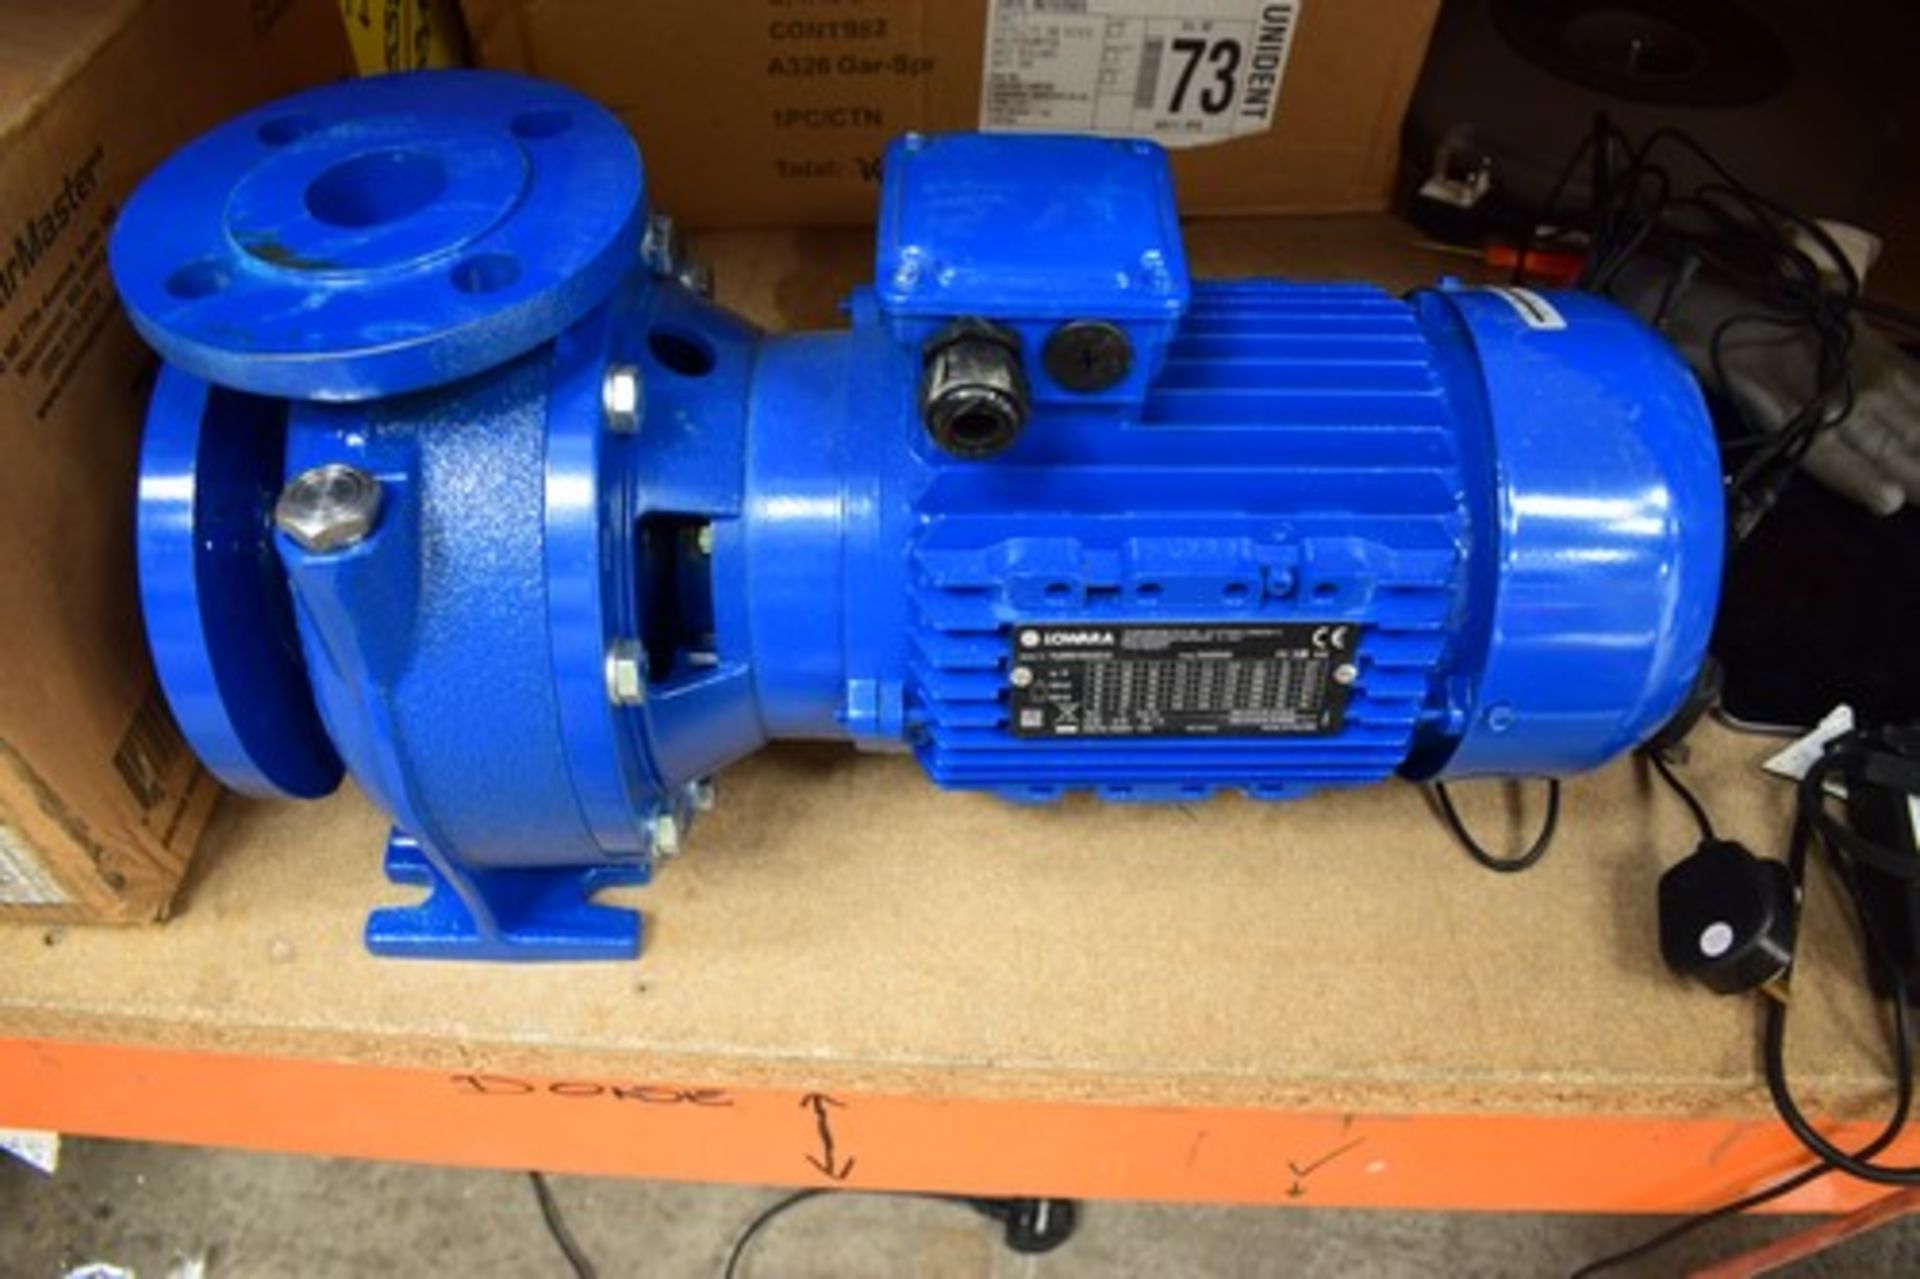 1 x Lowara water pump, Model NSCE40 125/30, P25 RCS4, code 101840220, 400V, 290rpm, 3KW - New